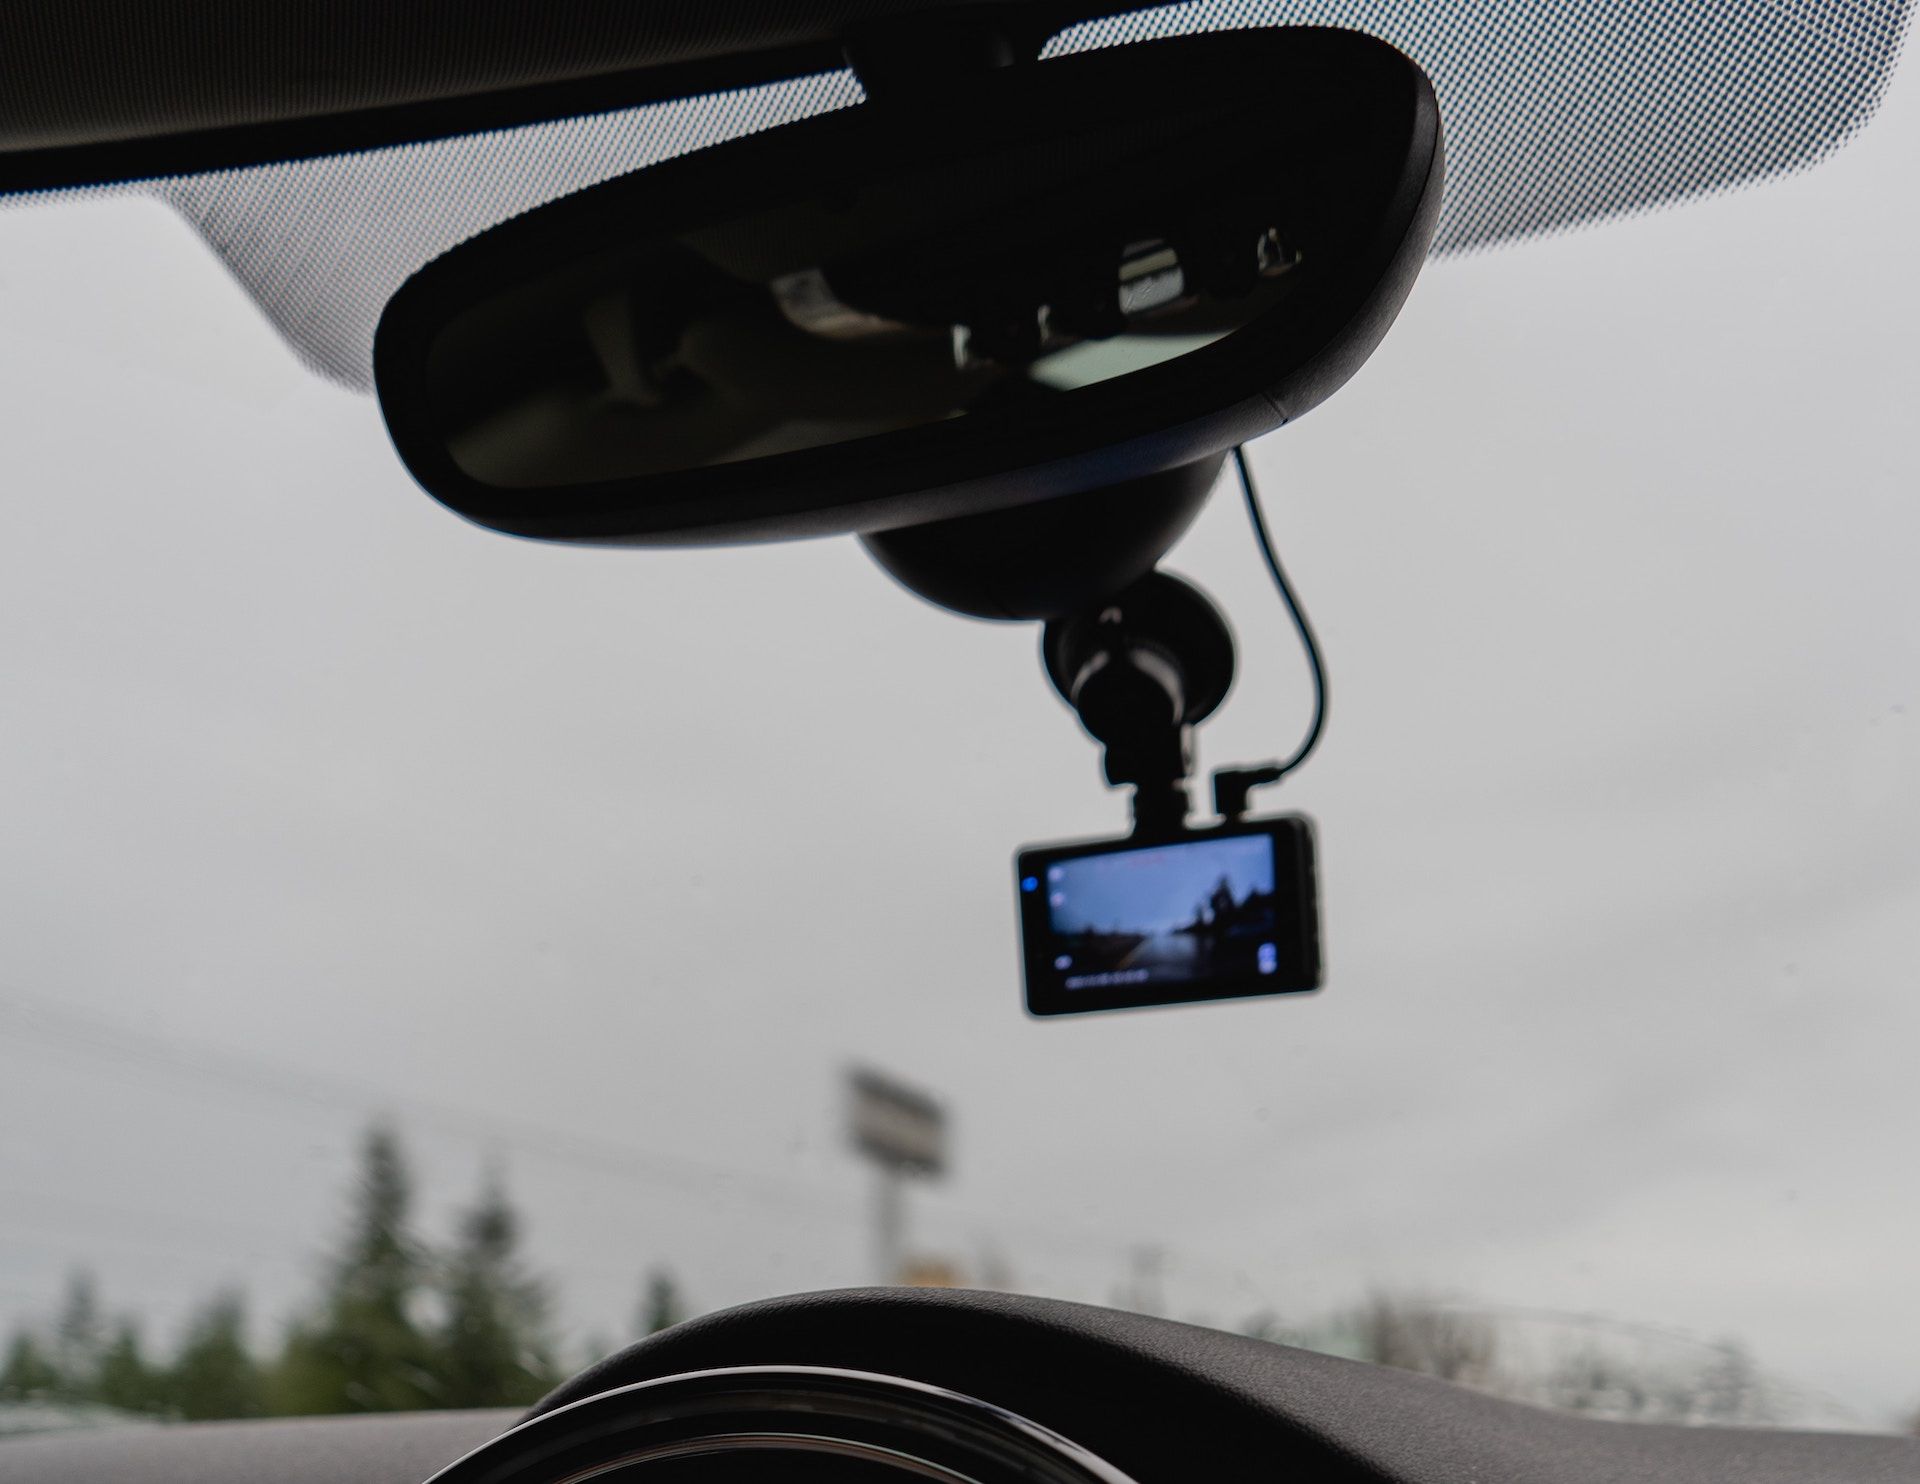 A windshield mounted dashcam